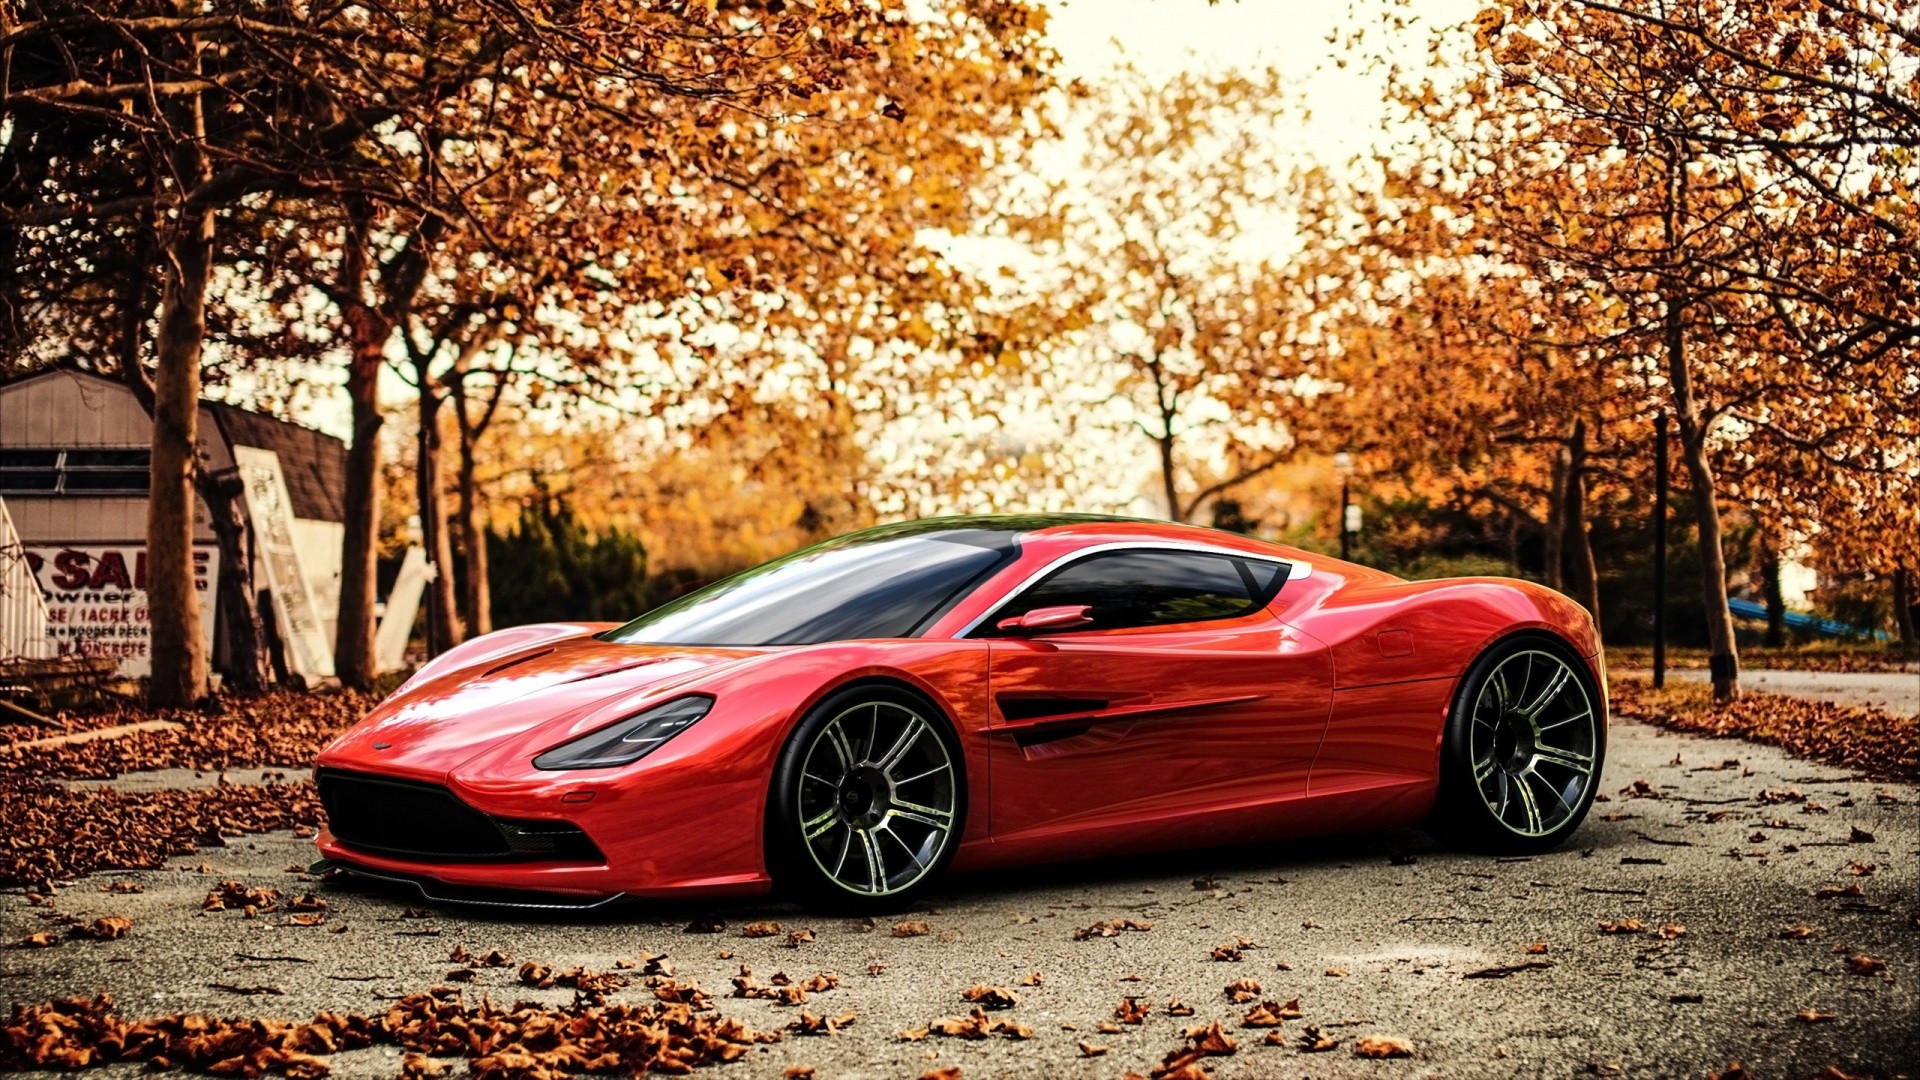 1920x1080 ... x 1080 2560 x 1440 Original. Wallpaper: 2013 Aston Martin ...